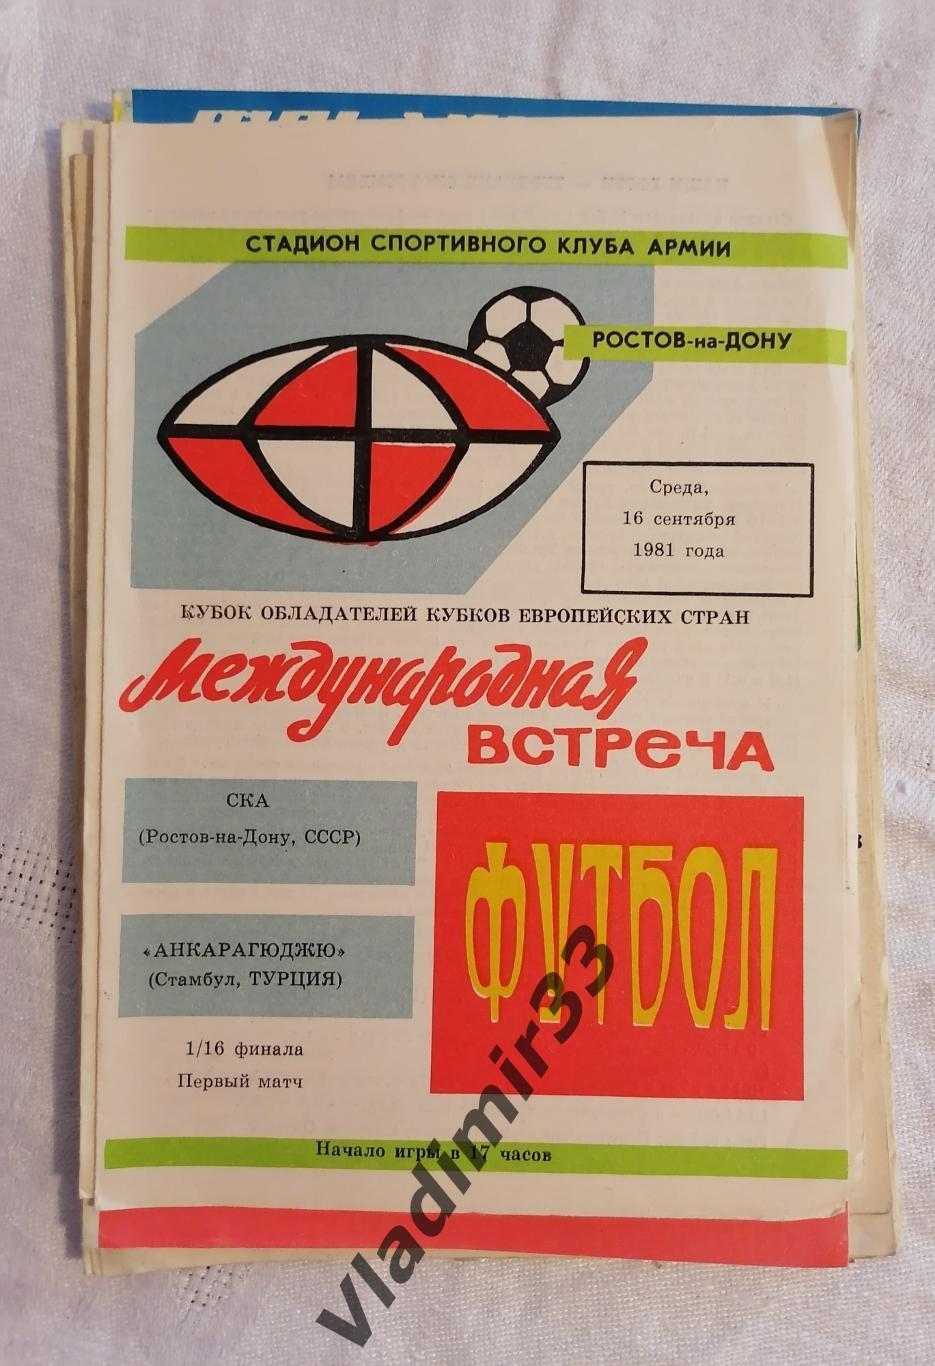 СКА Ростов-на-Дону - Анкарагюджю Турция 1981 программа